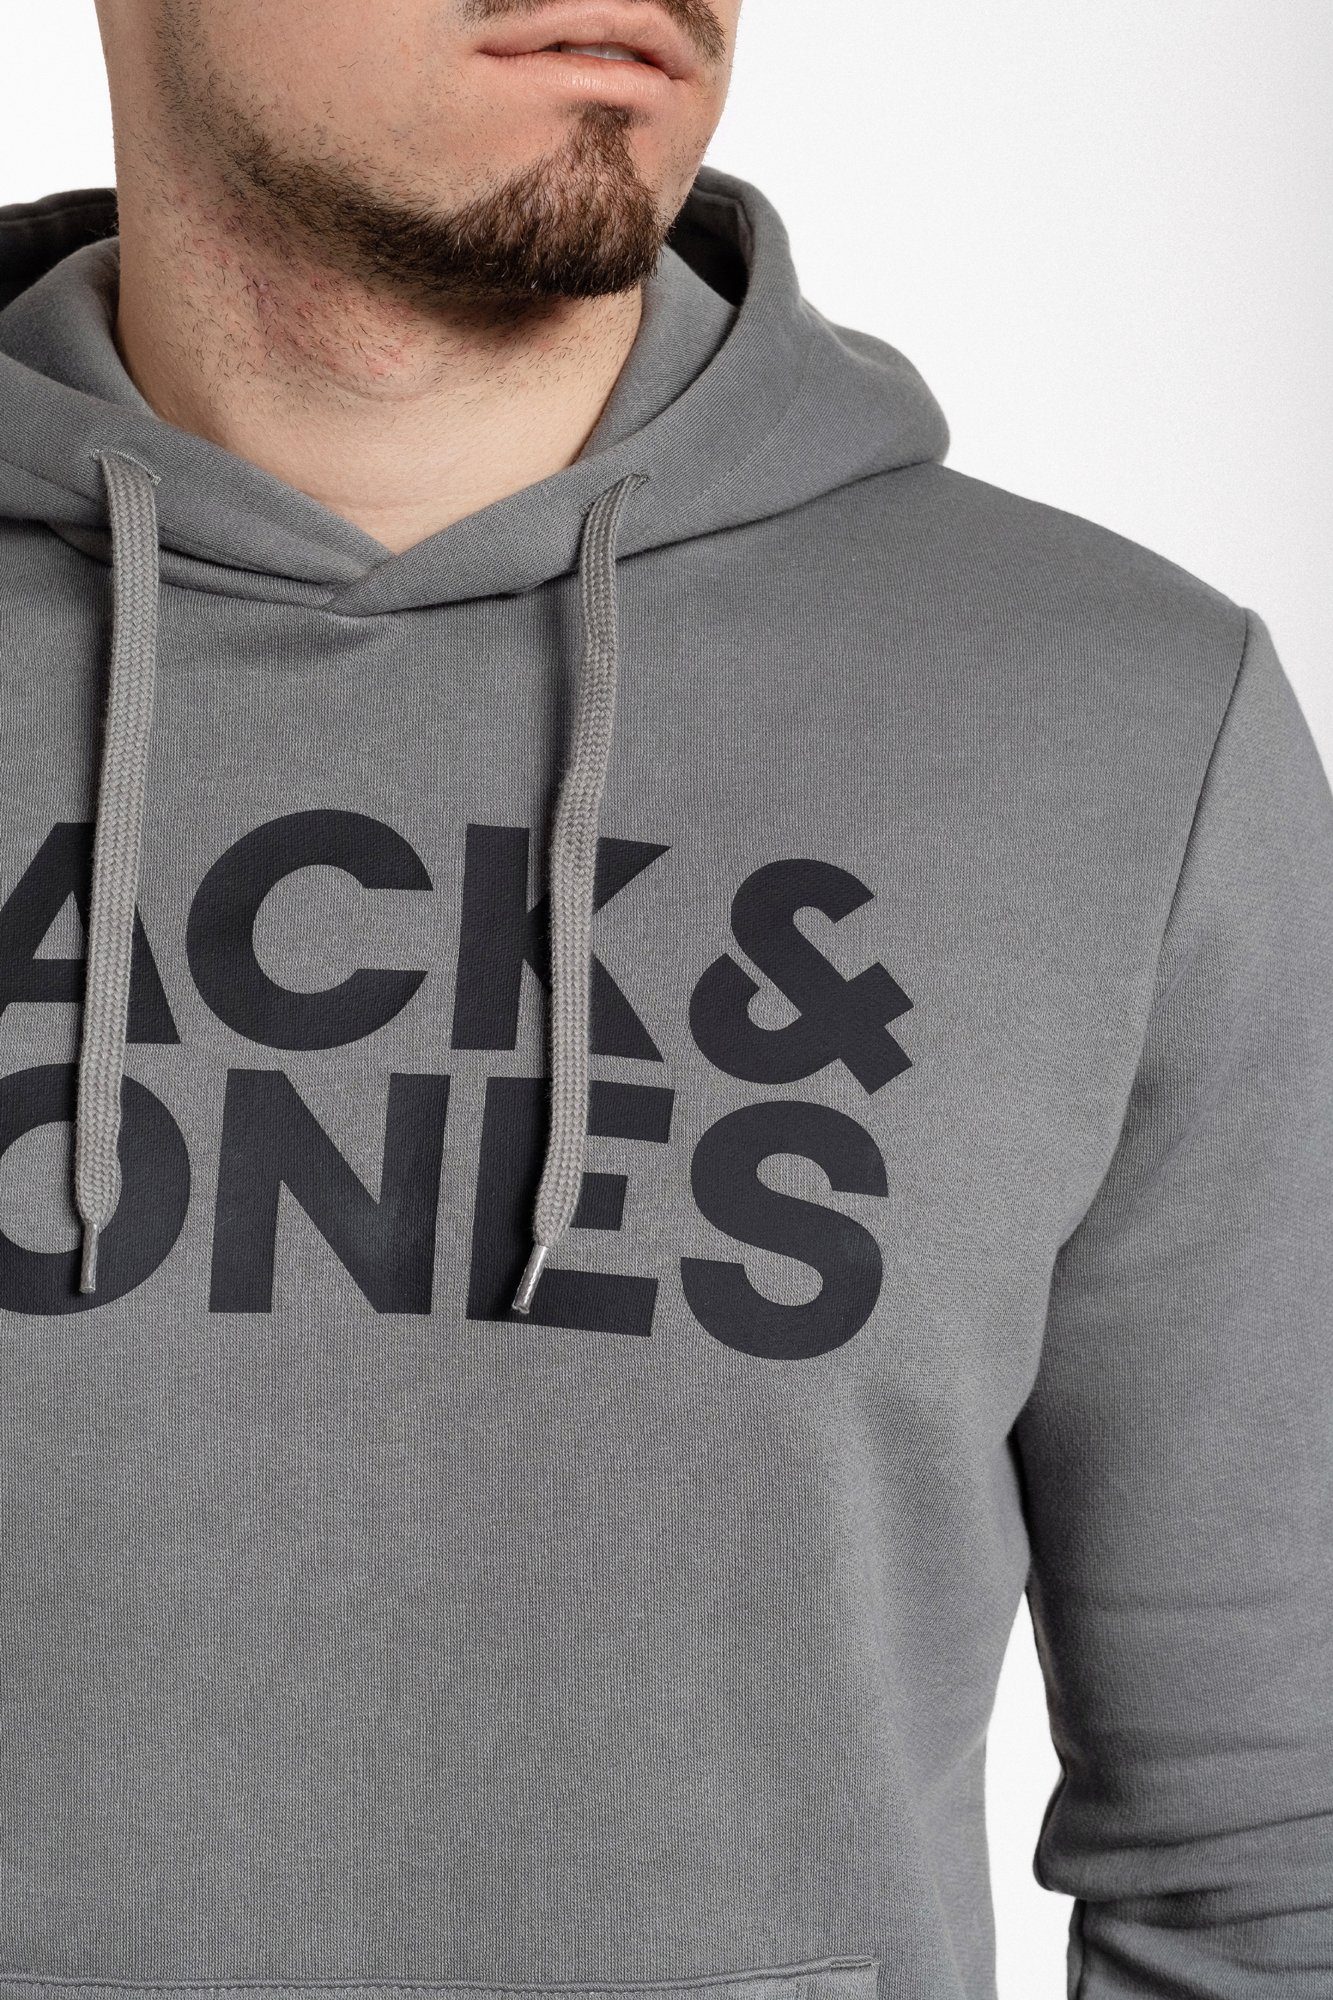 Jack & Jones Kängurutasche Kapuzensweatshirt Sedona-Black mit